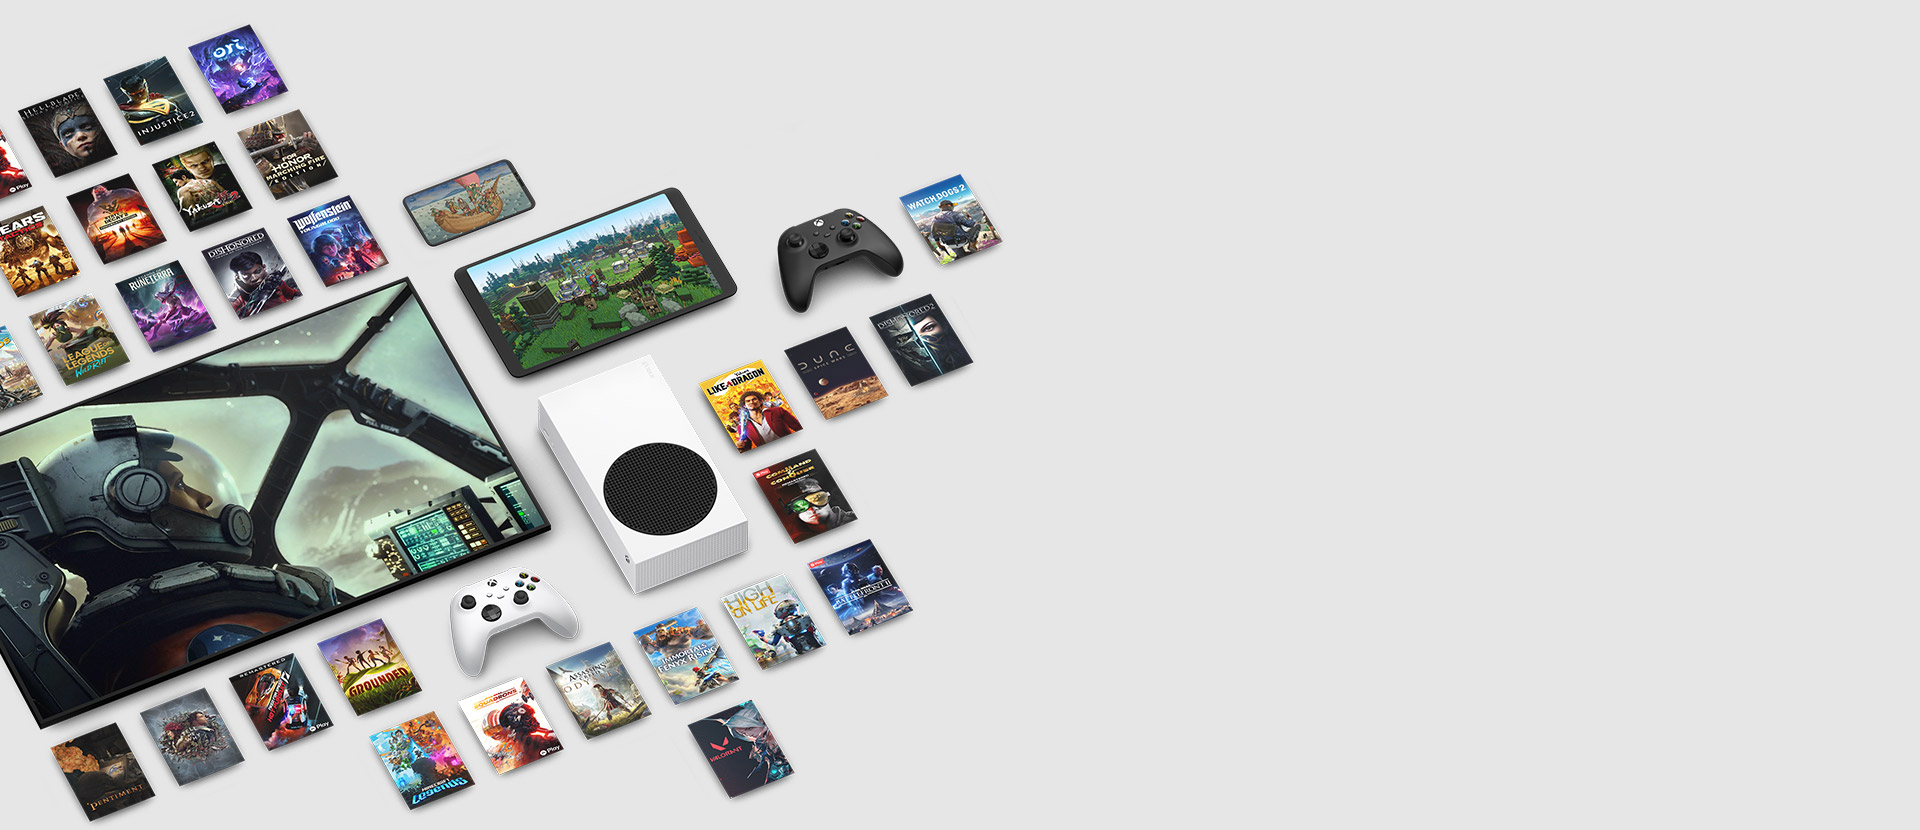 Xbox Game Pass Ultimate에서 지금 플레이할 수 있는 여러 게임이 콘솔, 휴대폰, 태블릿, 스마트 TV, 컨트롤러 등 여러 디바이스를 둘러싸고 있는 게임 아트.